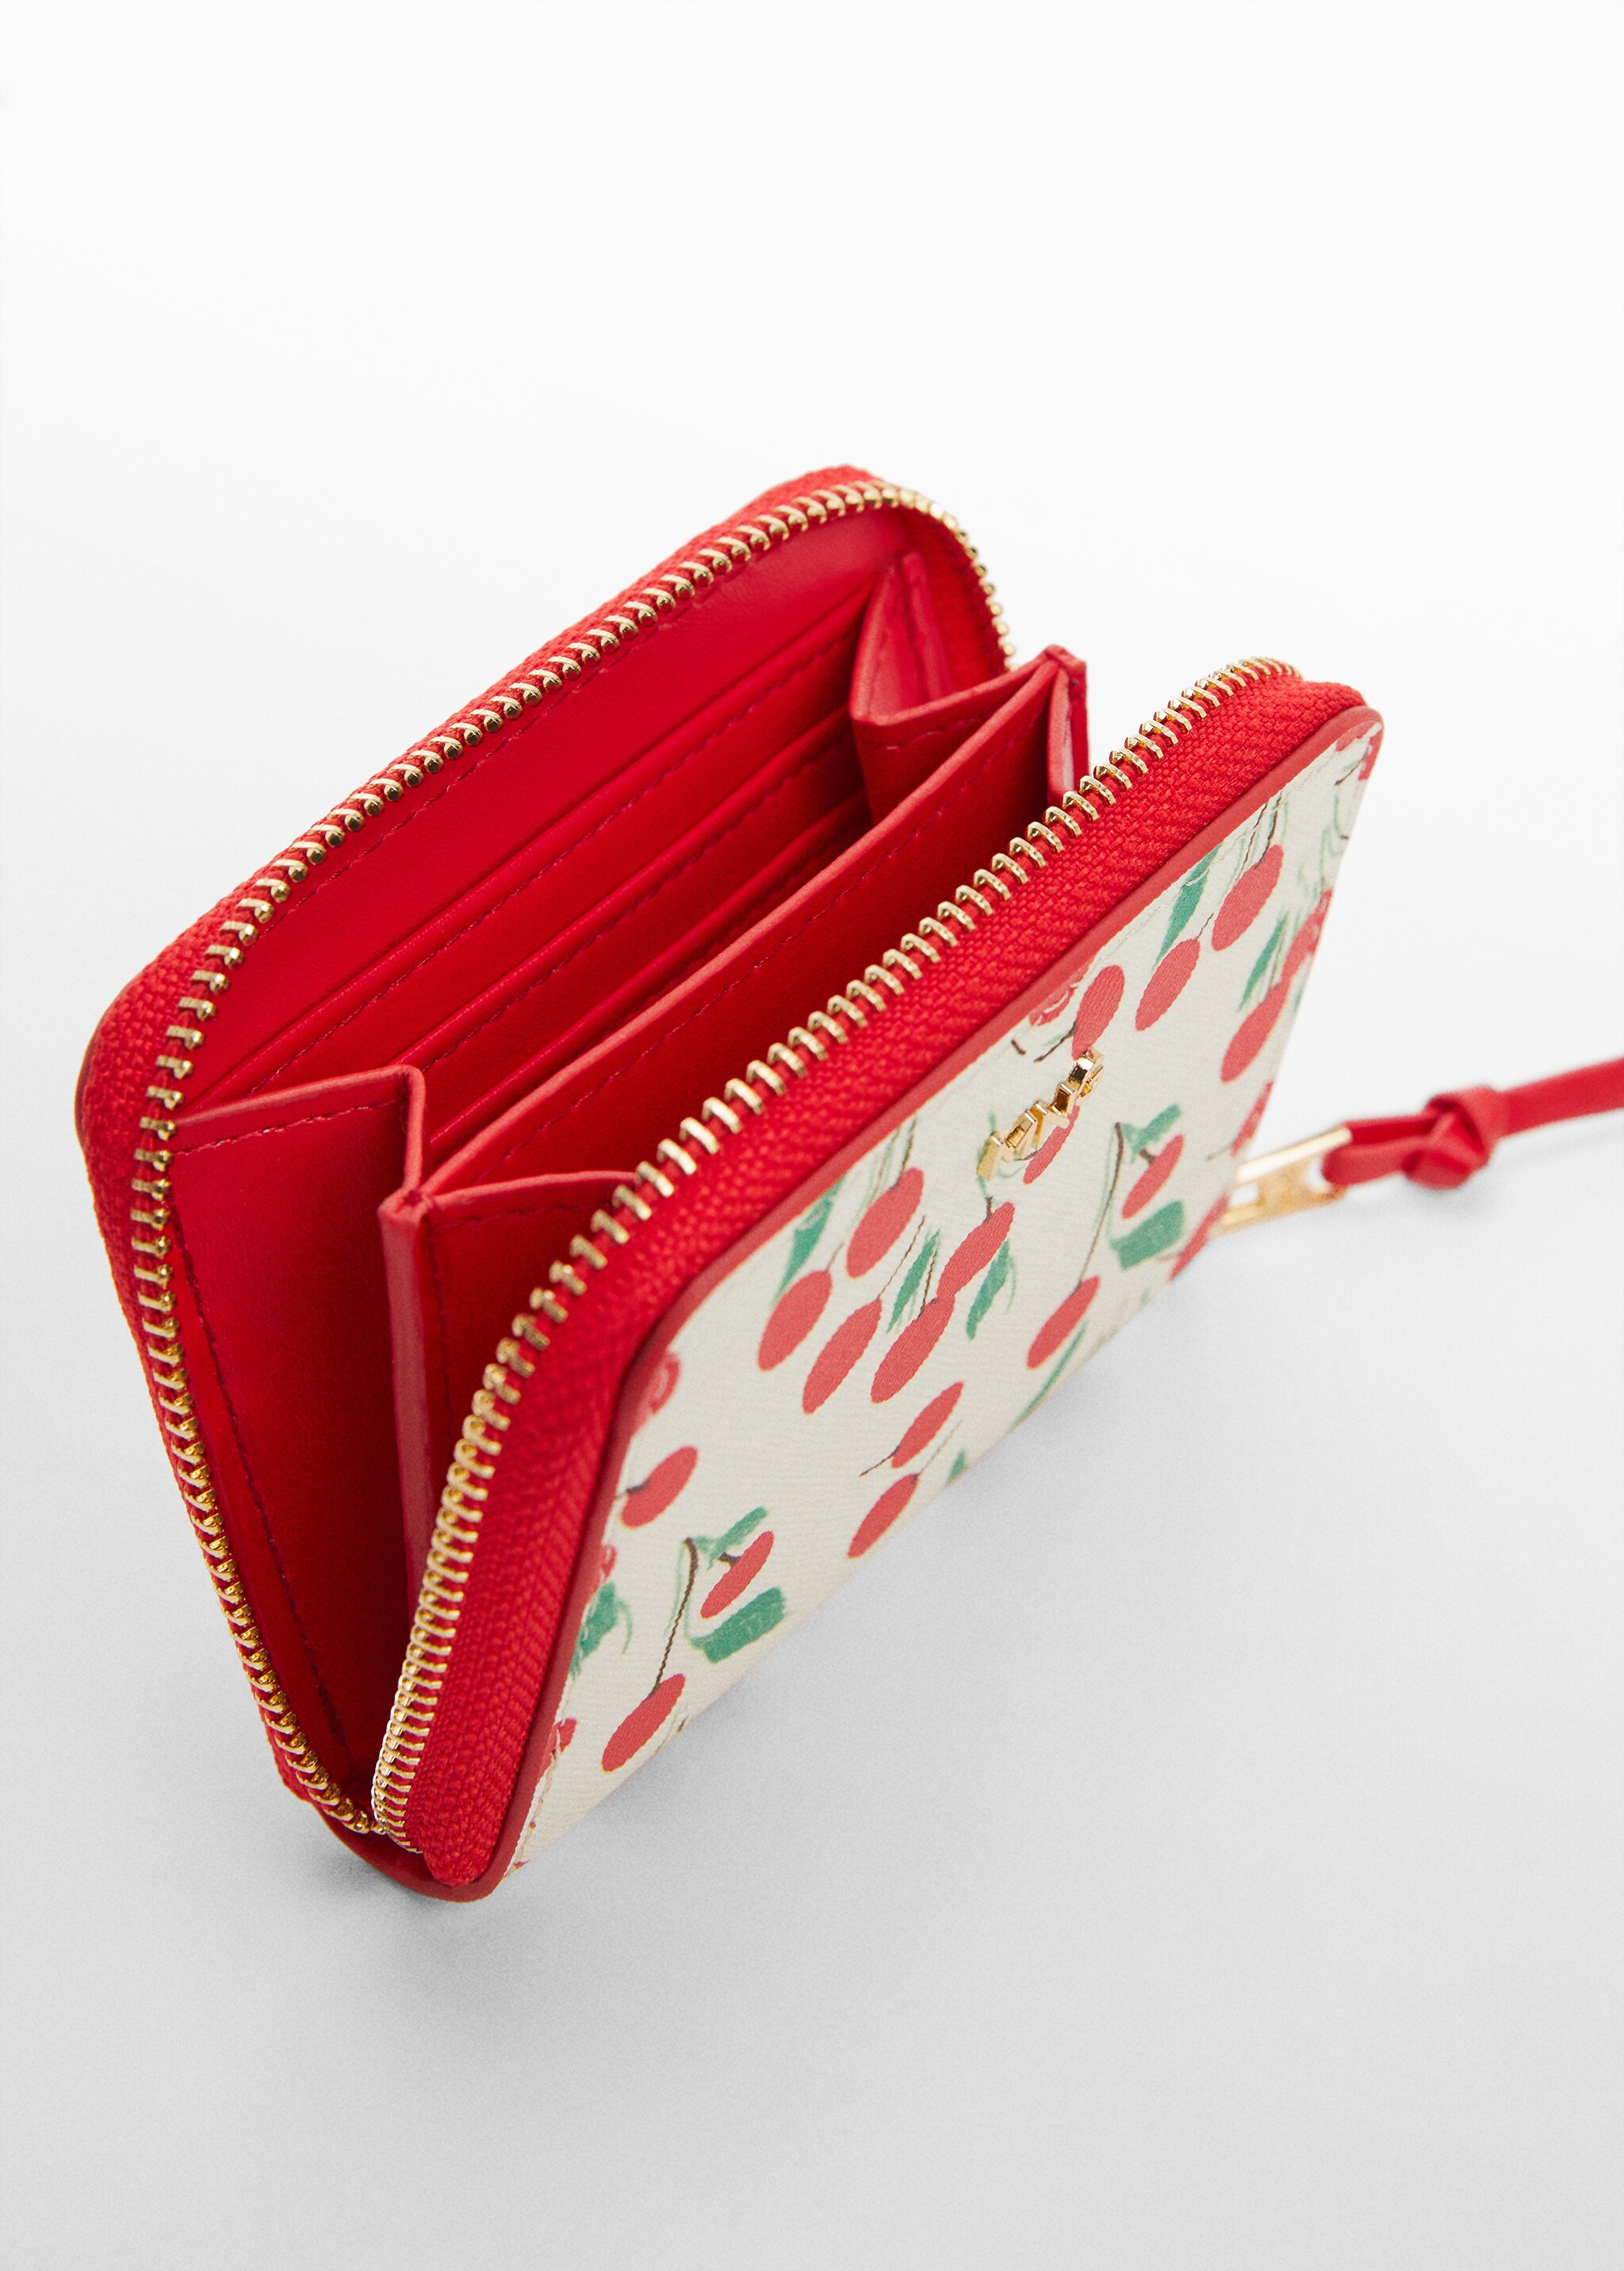 Cherry printed wallet - Medium plane